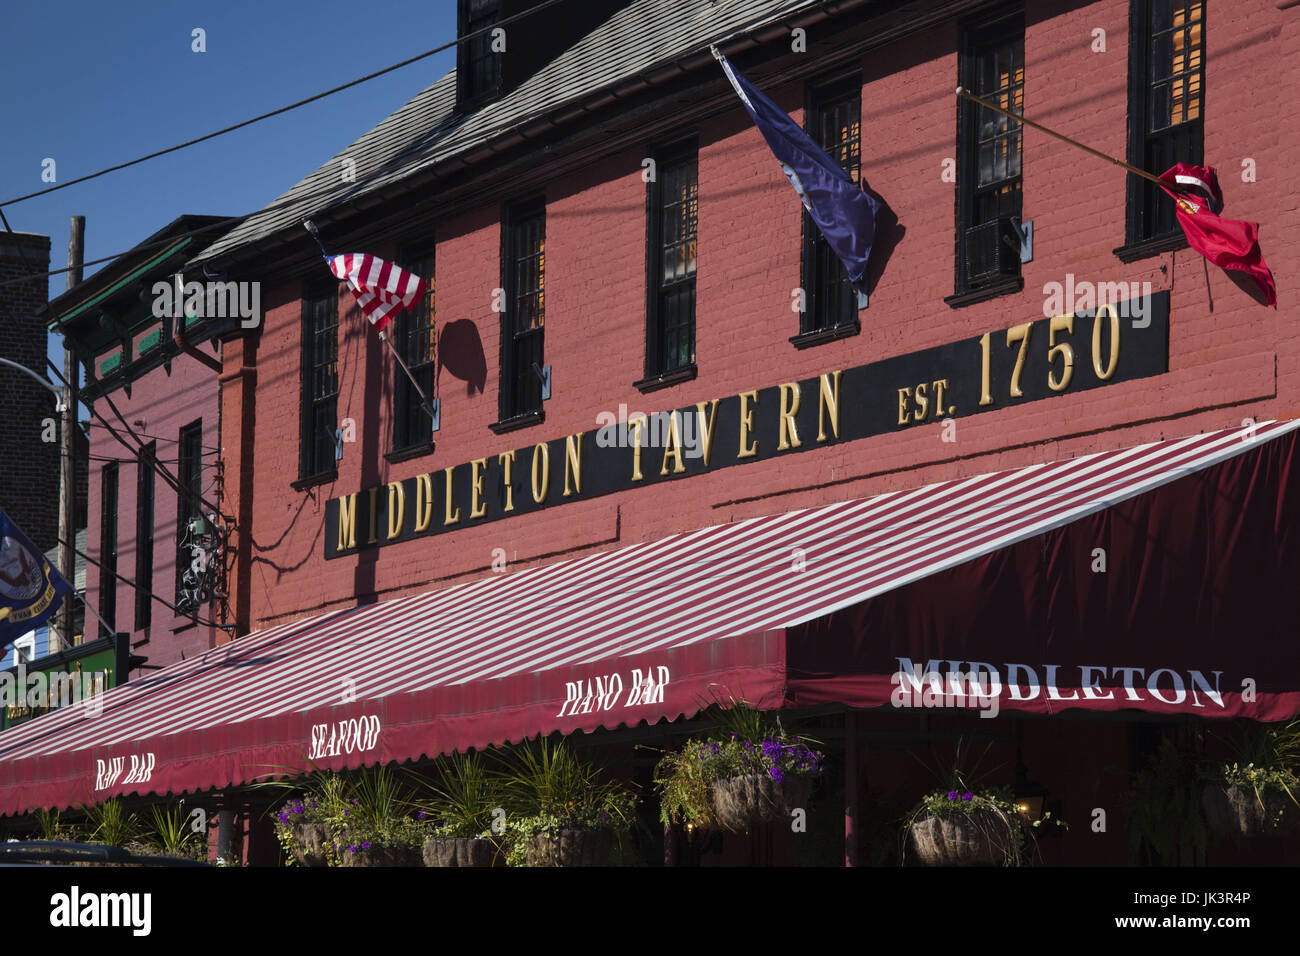 USA, Maryland, Annapolis, Middleton Tavern, b.1750 Stock Photo